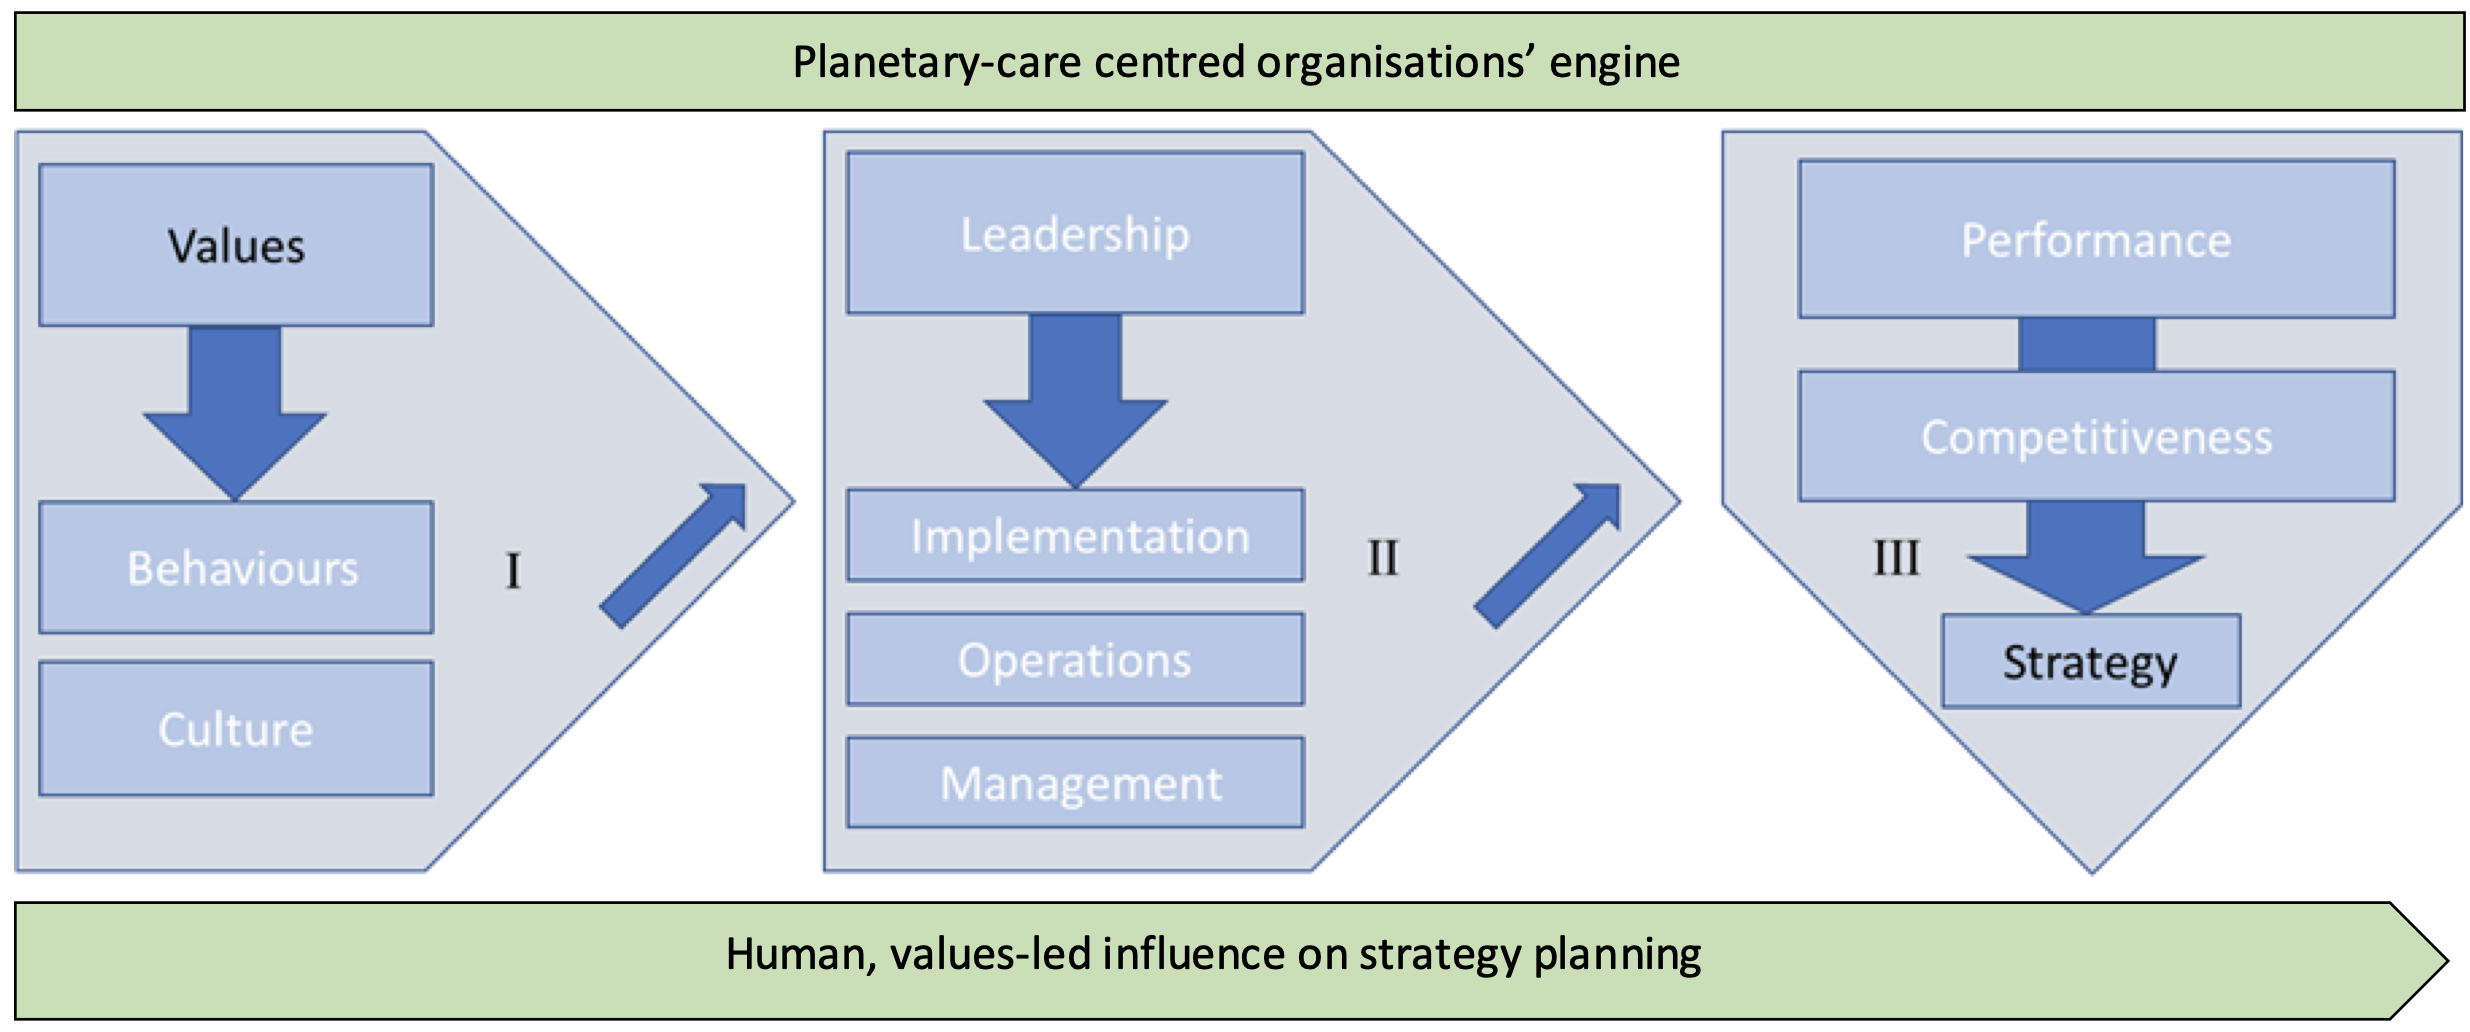 Savrij Droste, W. (2017) How a values-led management approach influences an organisation’s strategy. Unpublished Mst dissertation. University of Cambridge.
